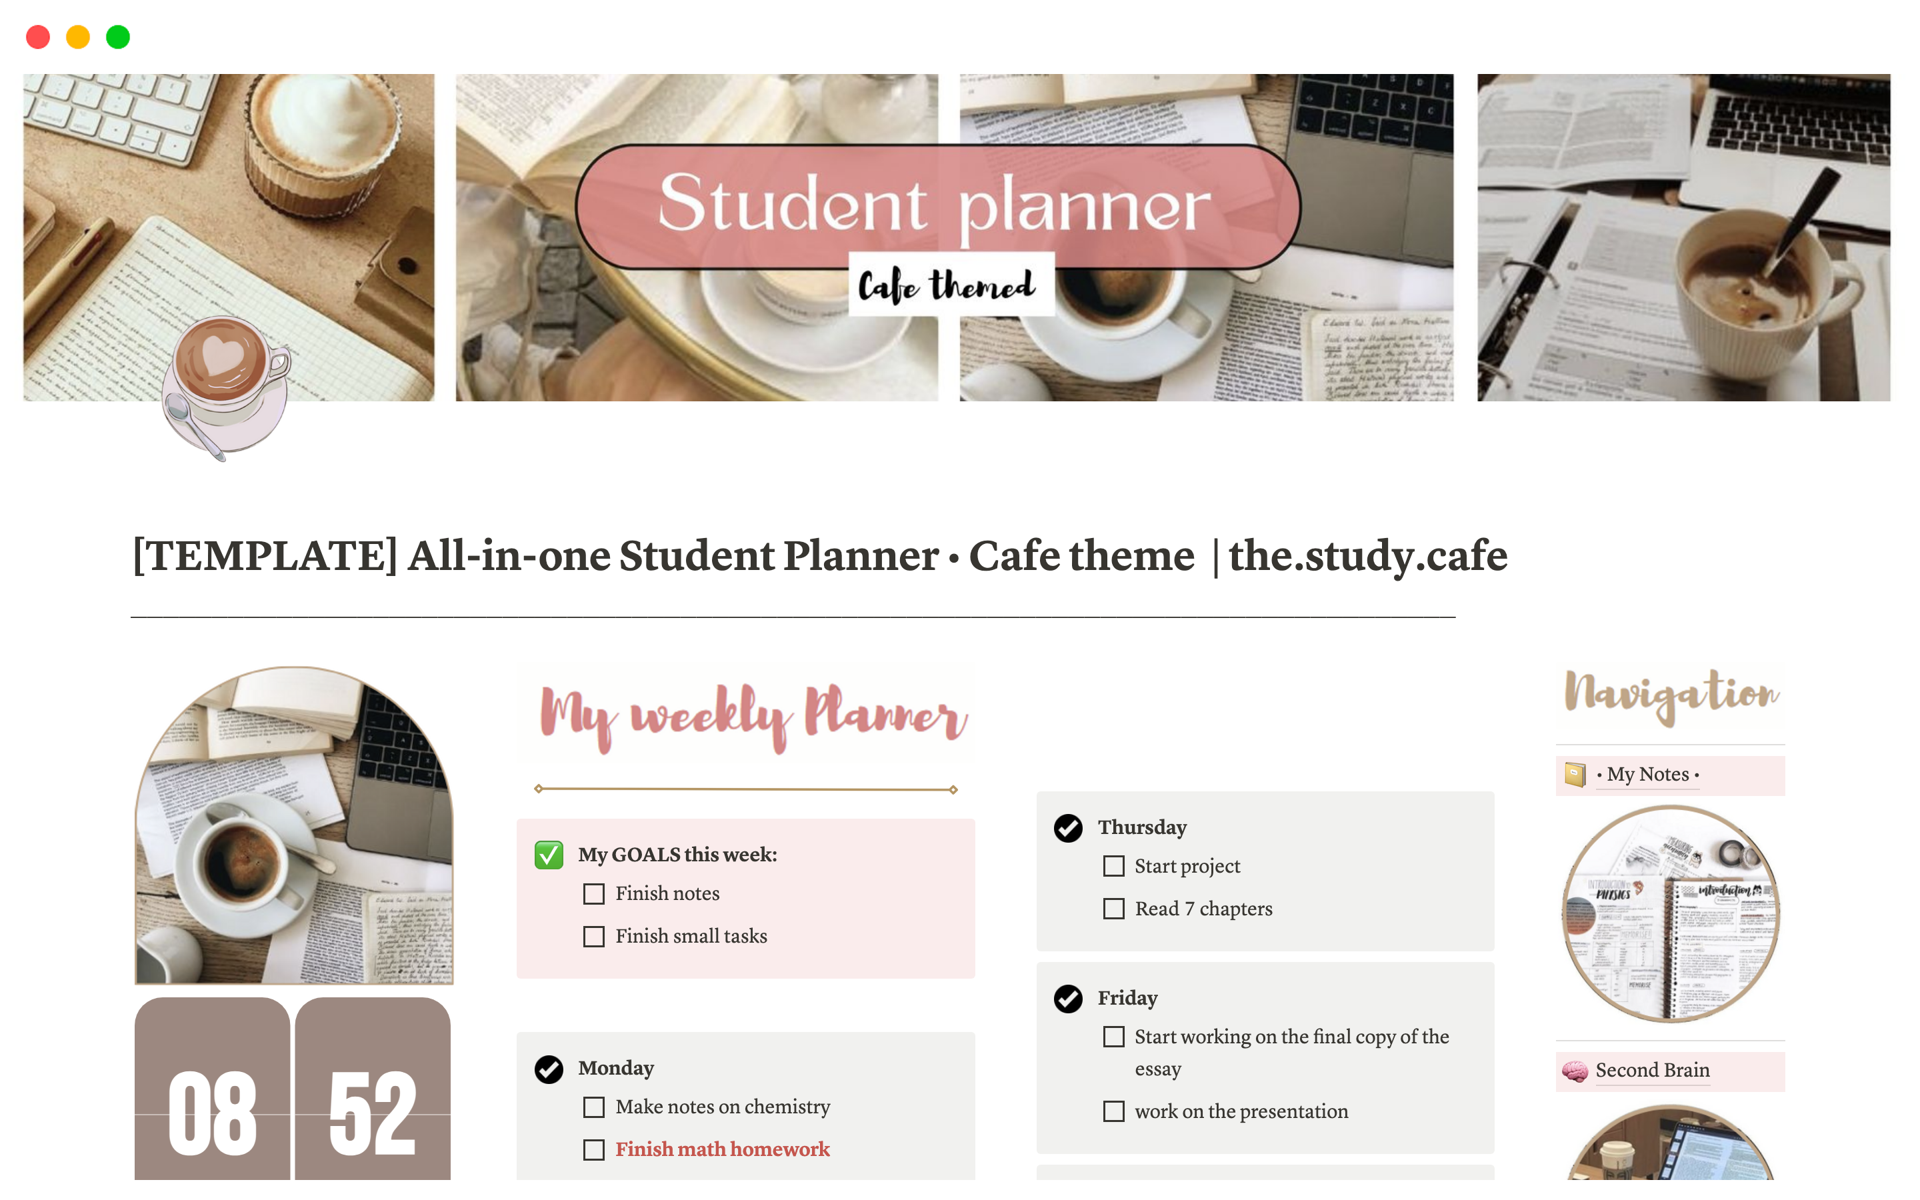 All-in-one Student Planner • Cafe theme님의 템플릿 미리보기